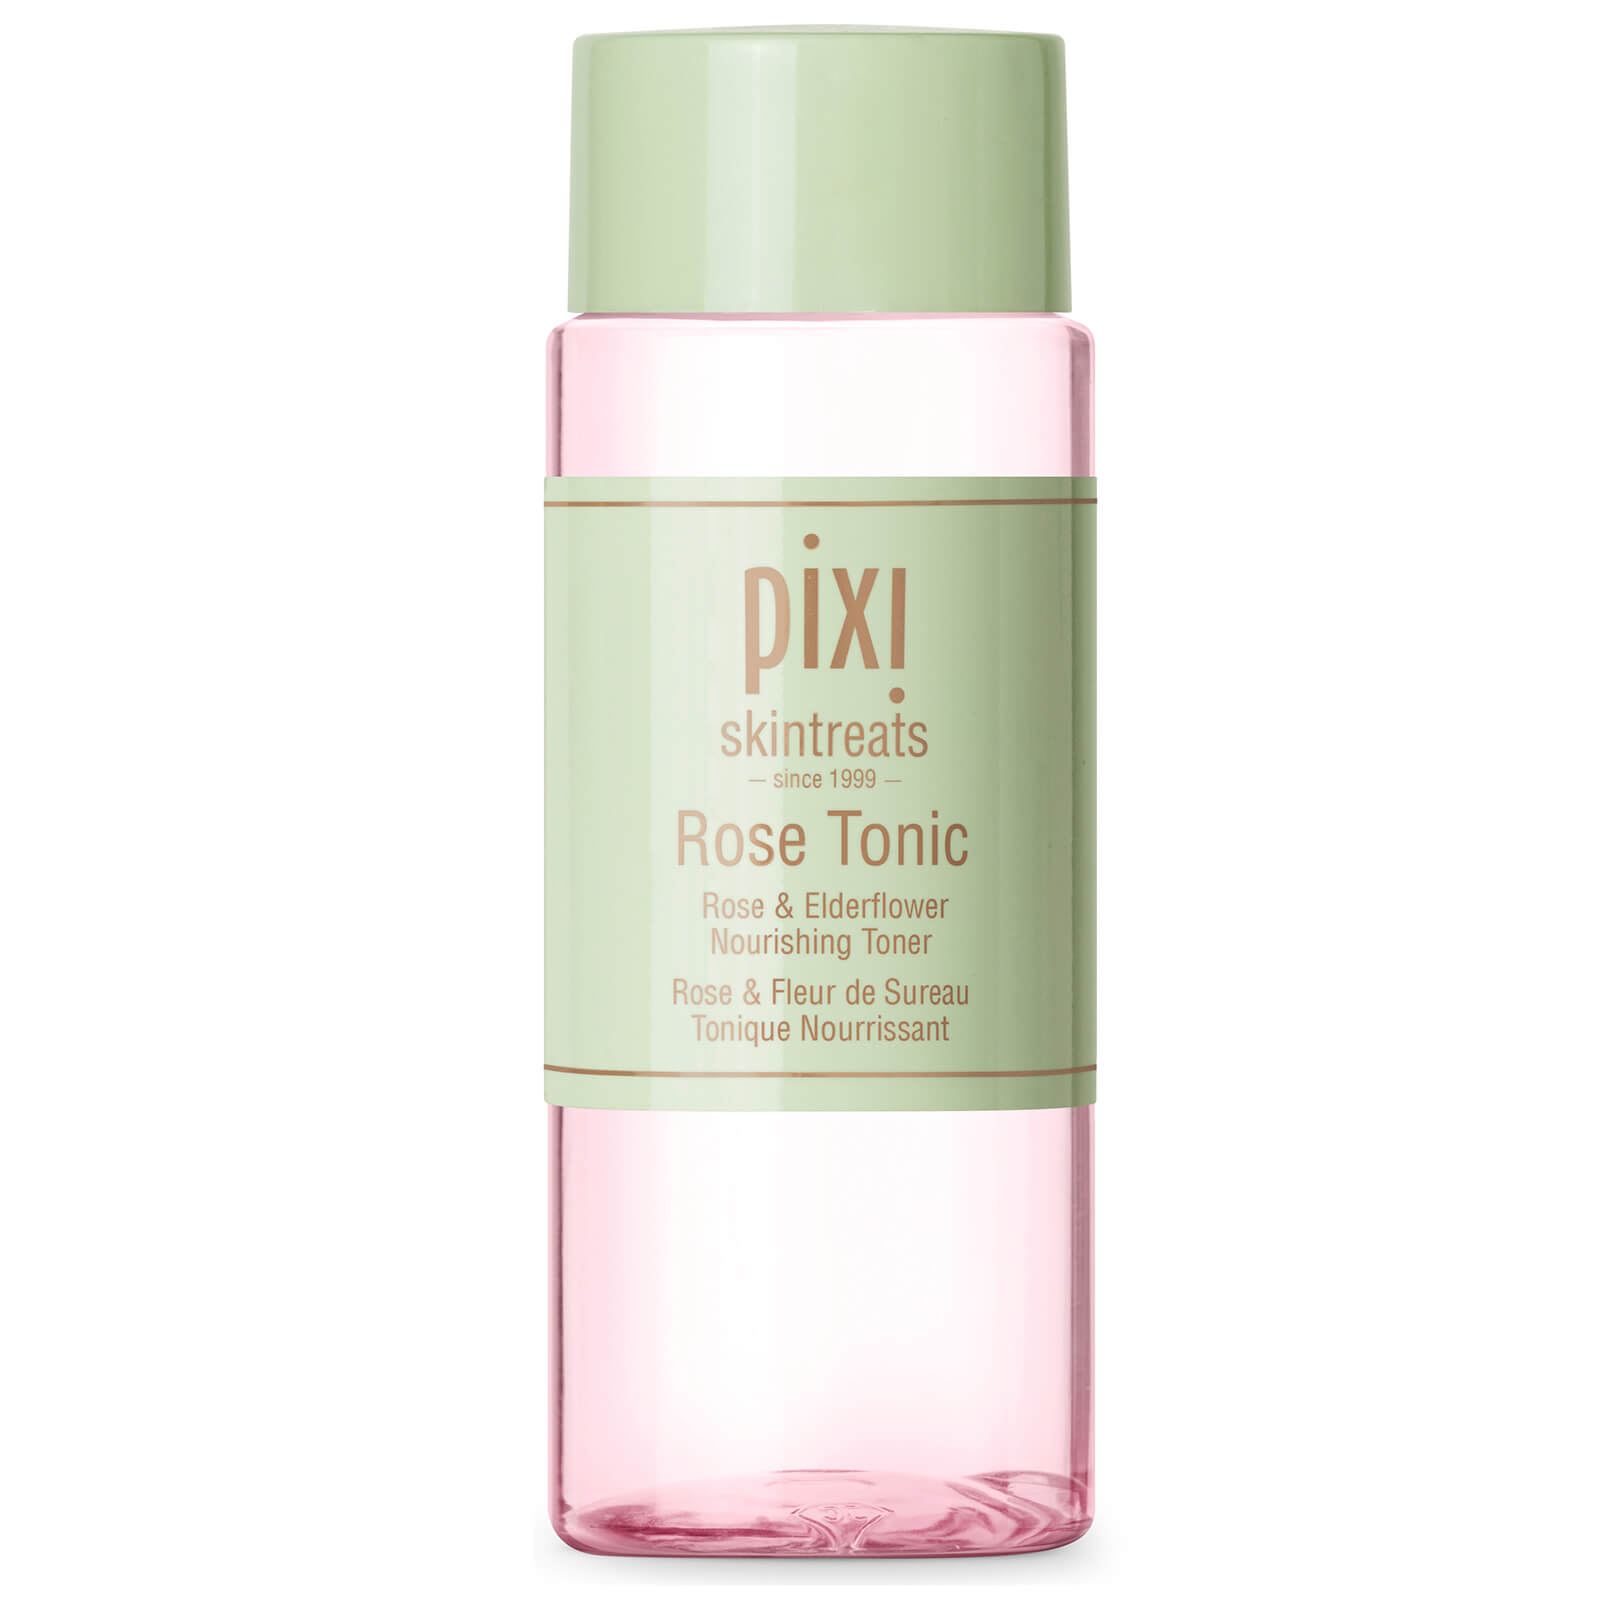 The PIXI Rose Tonic